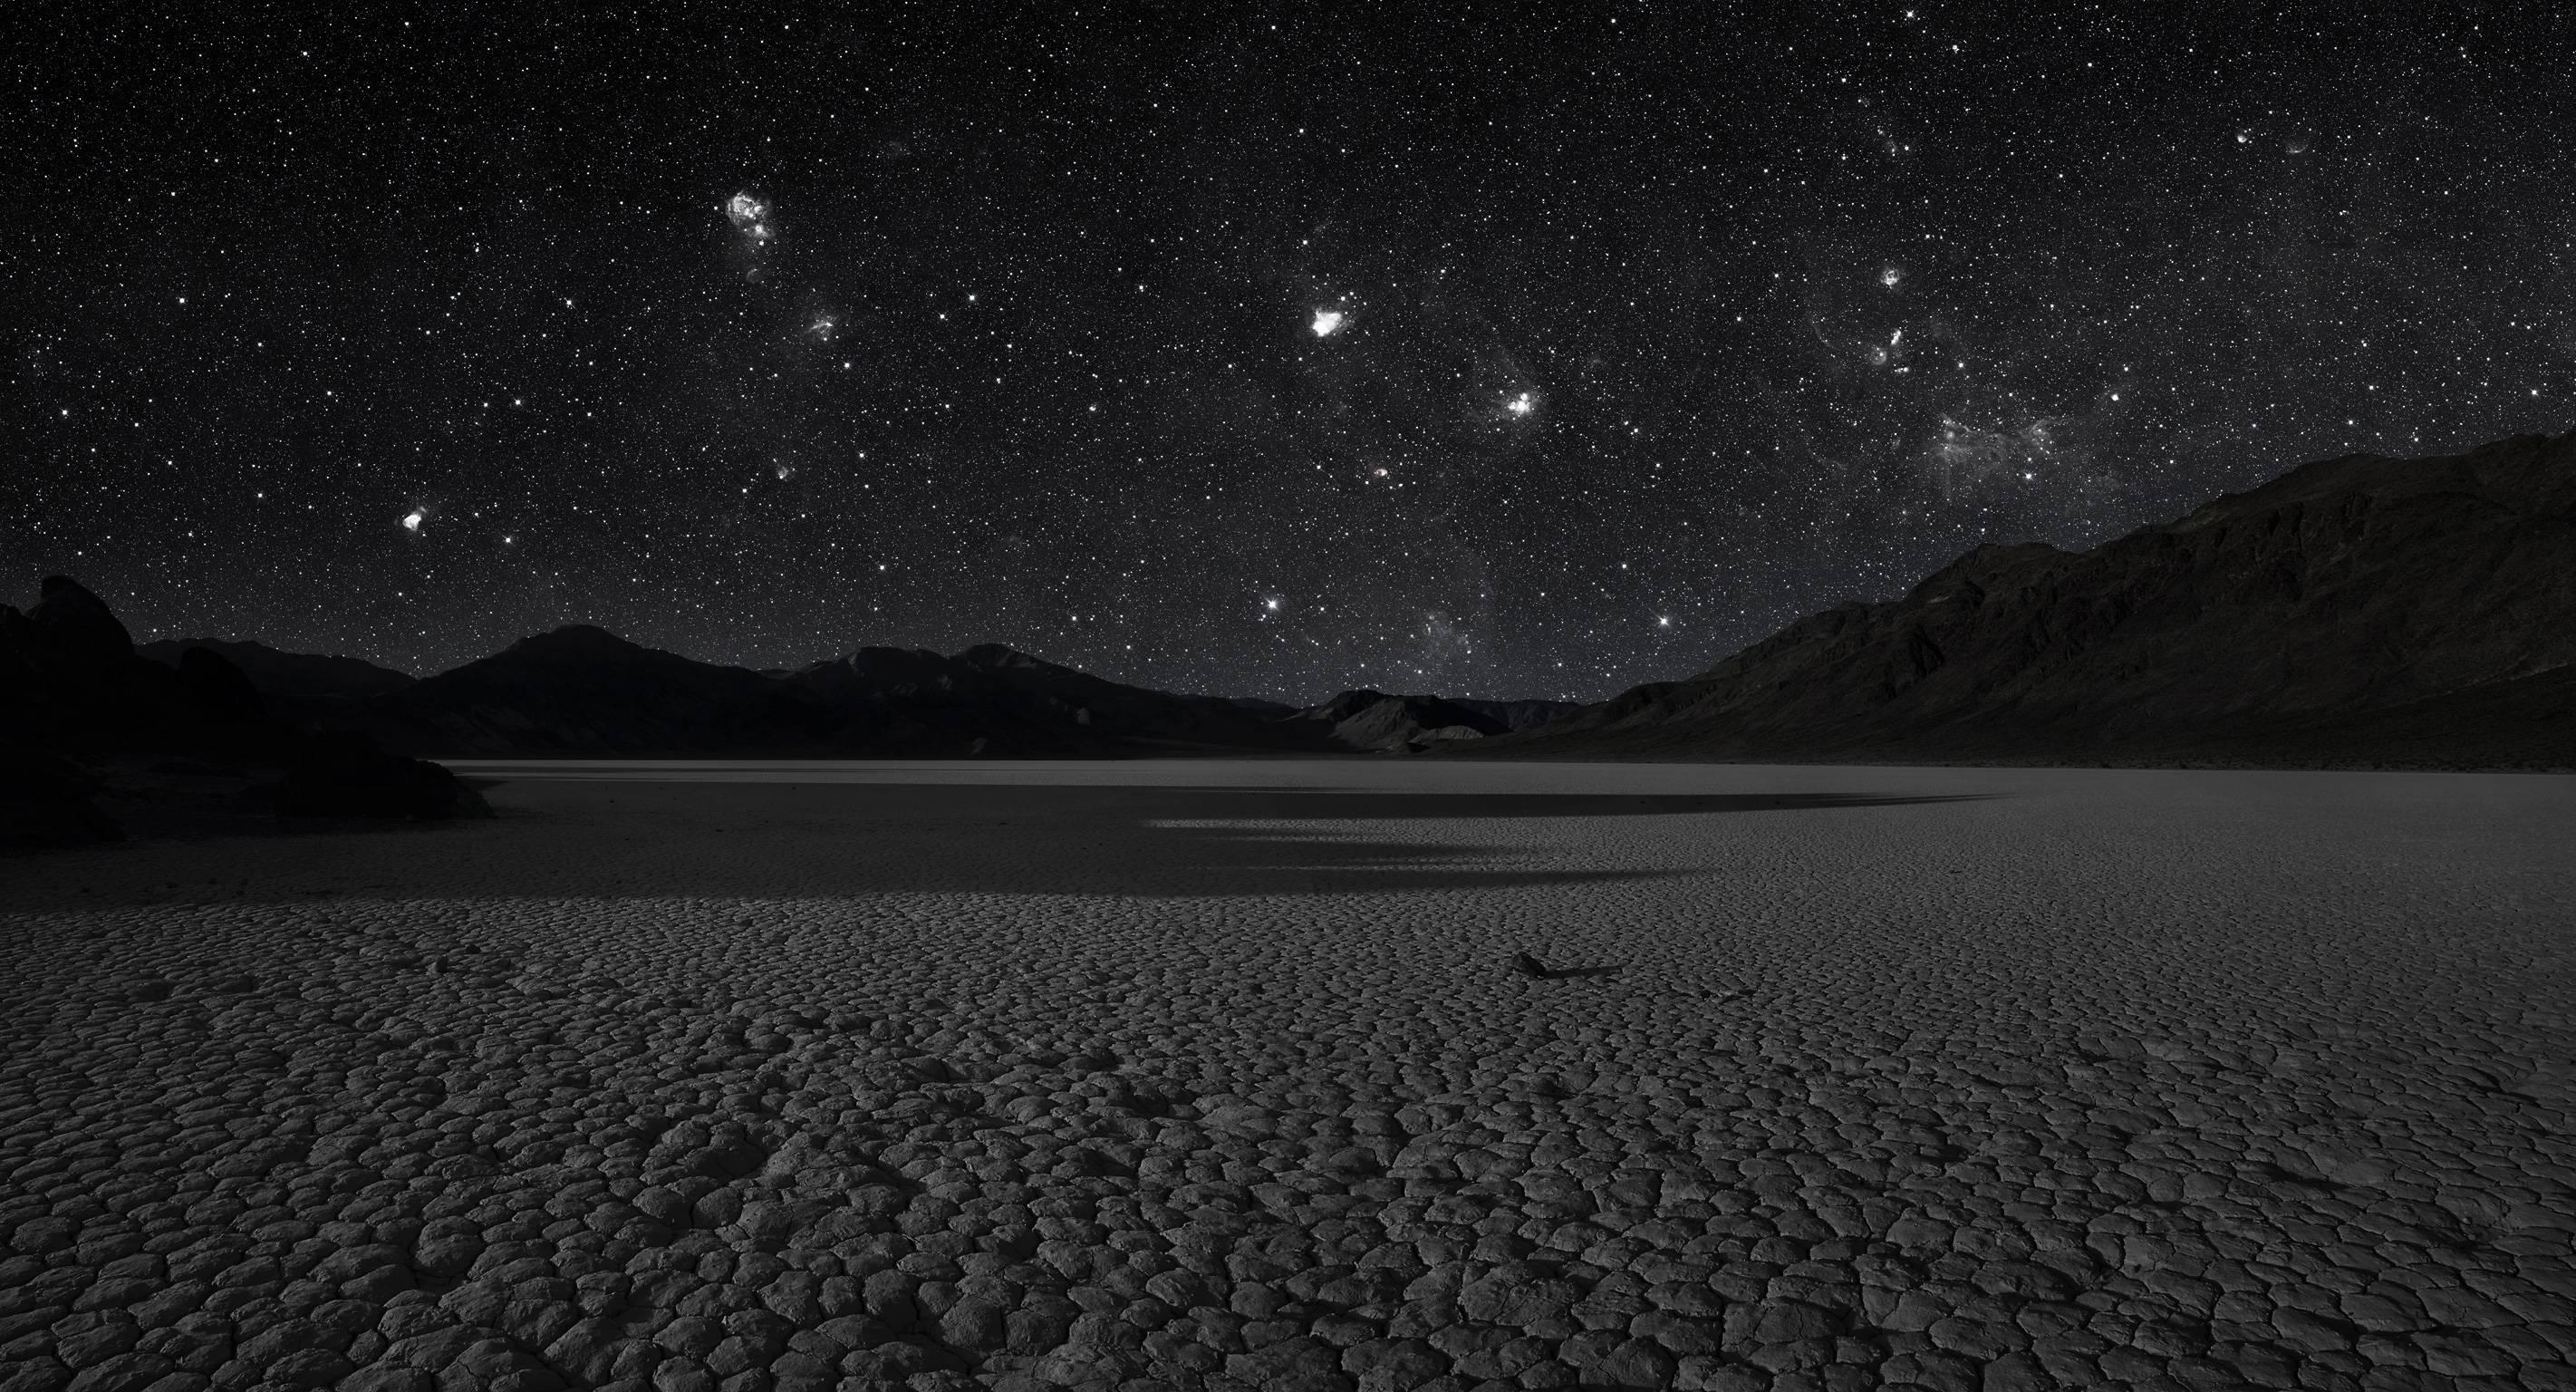 Racetrack (framed) - desert landscape panorama under mesmerizing night sky